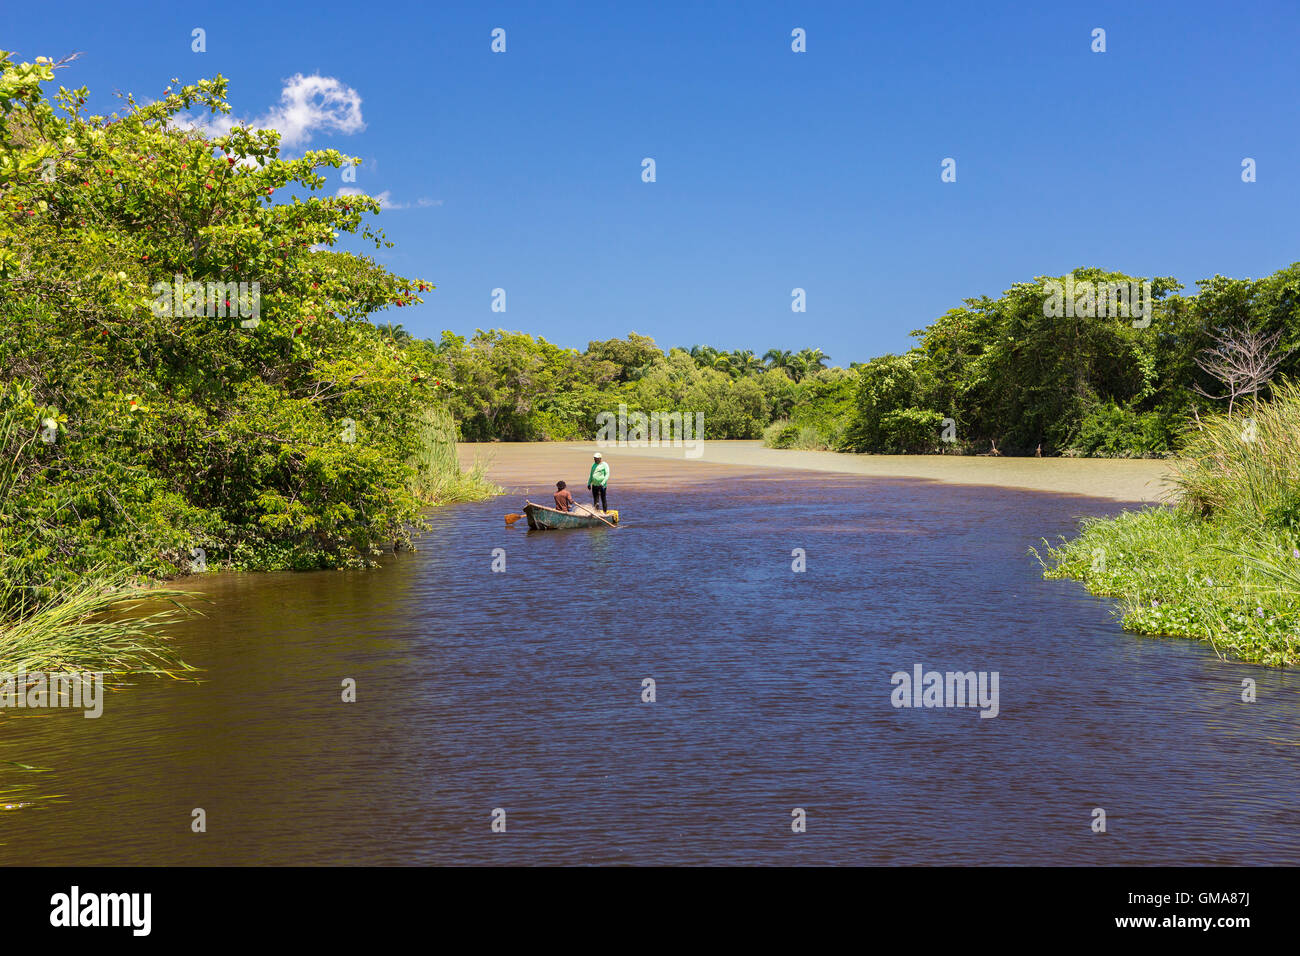 DOMINICAN REPUBLIC - Fishermen in rowboat on Yasica River Stock Photo